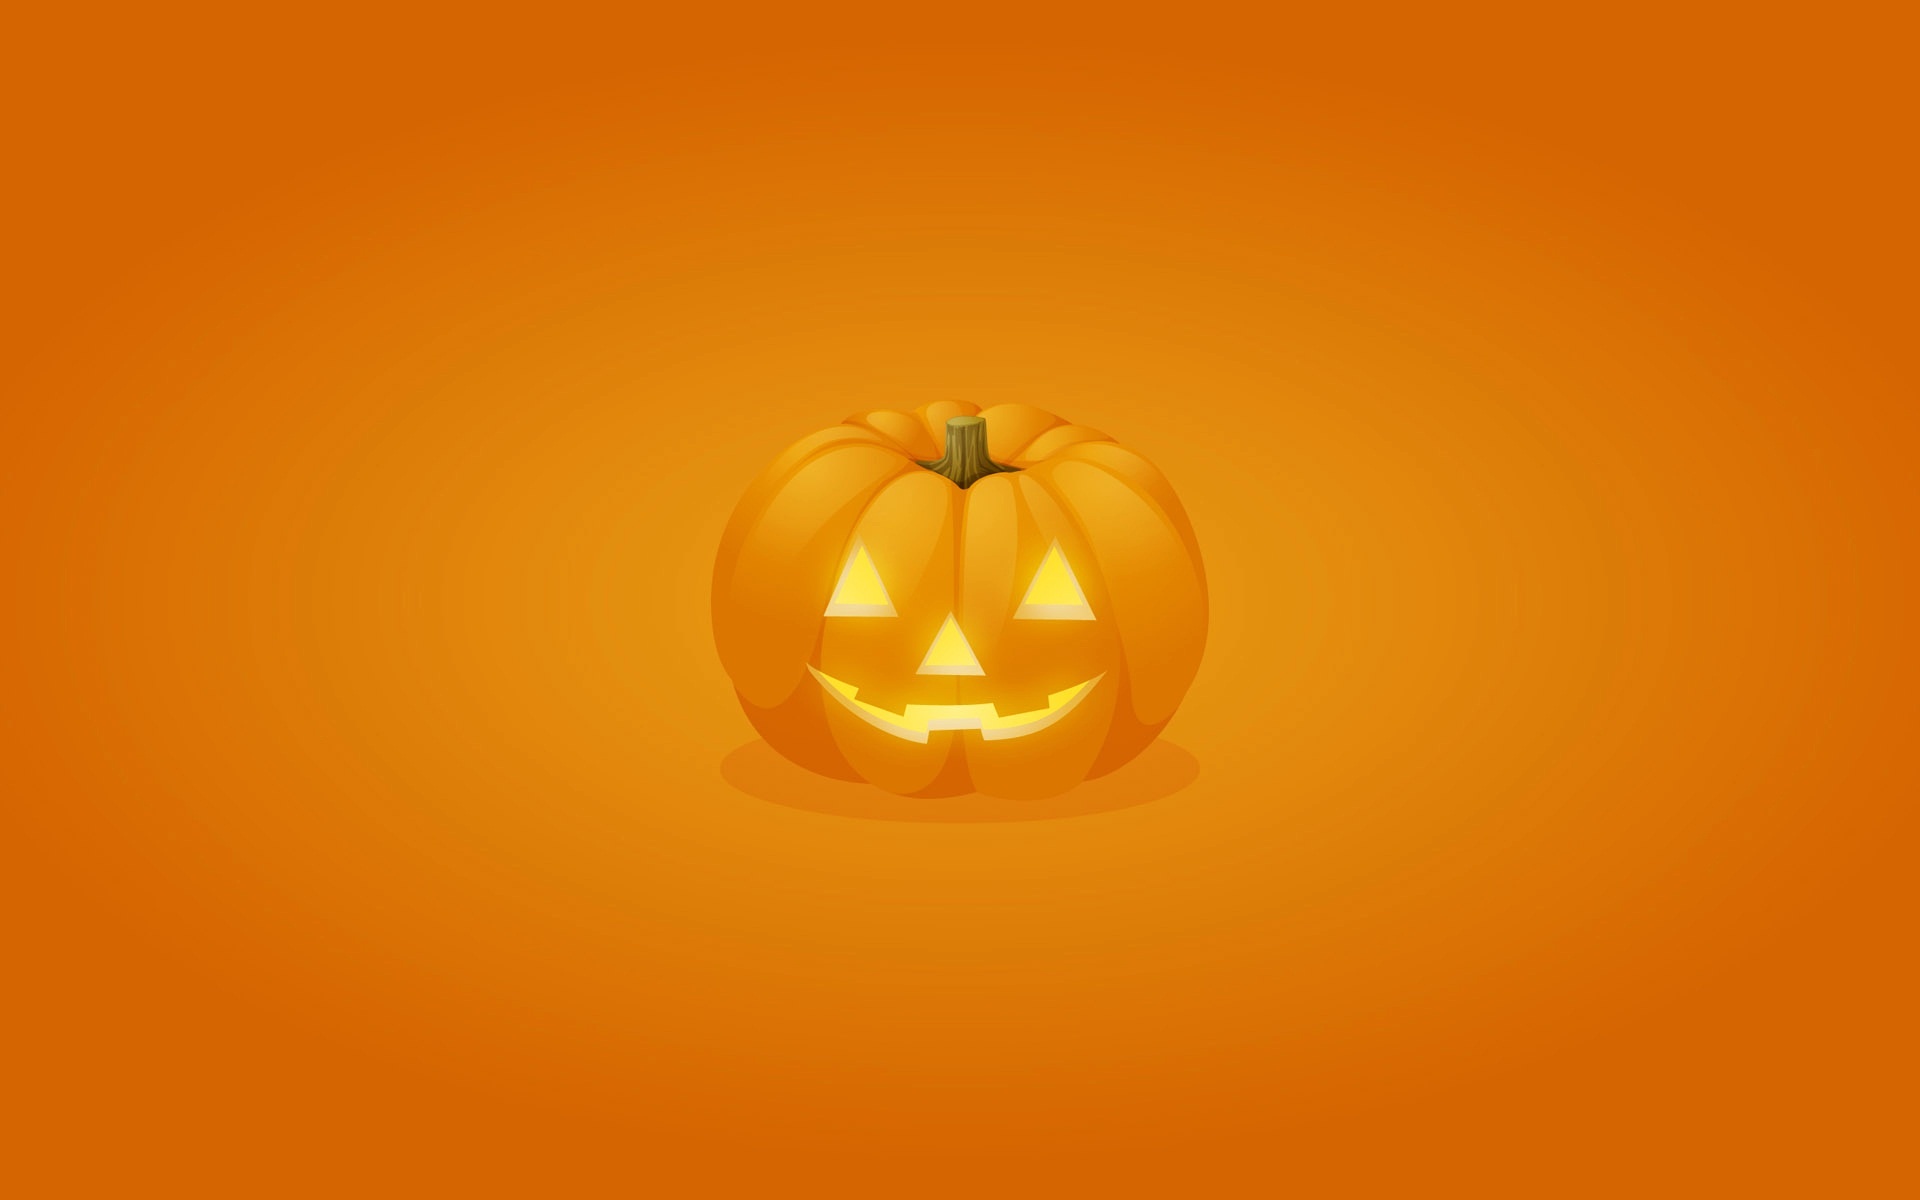 Halloween Pumpkin Wallpaper in jpg format for free download